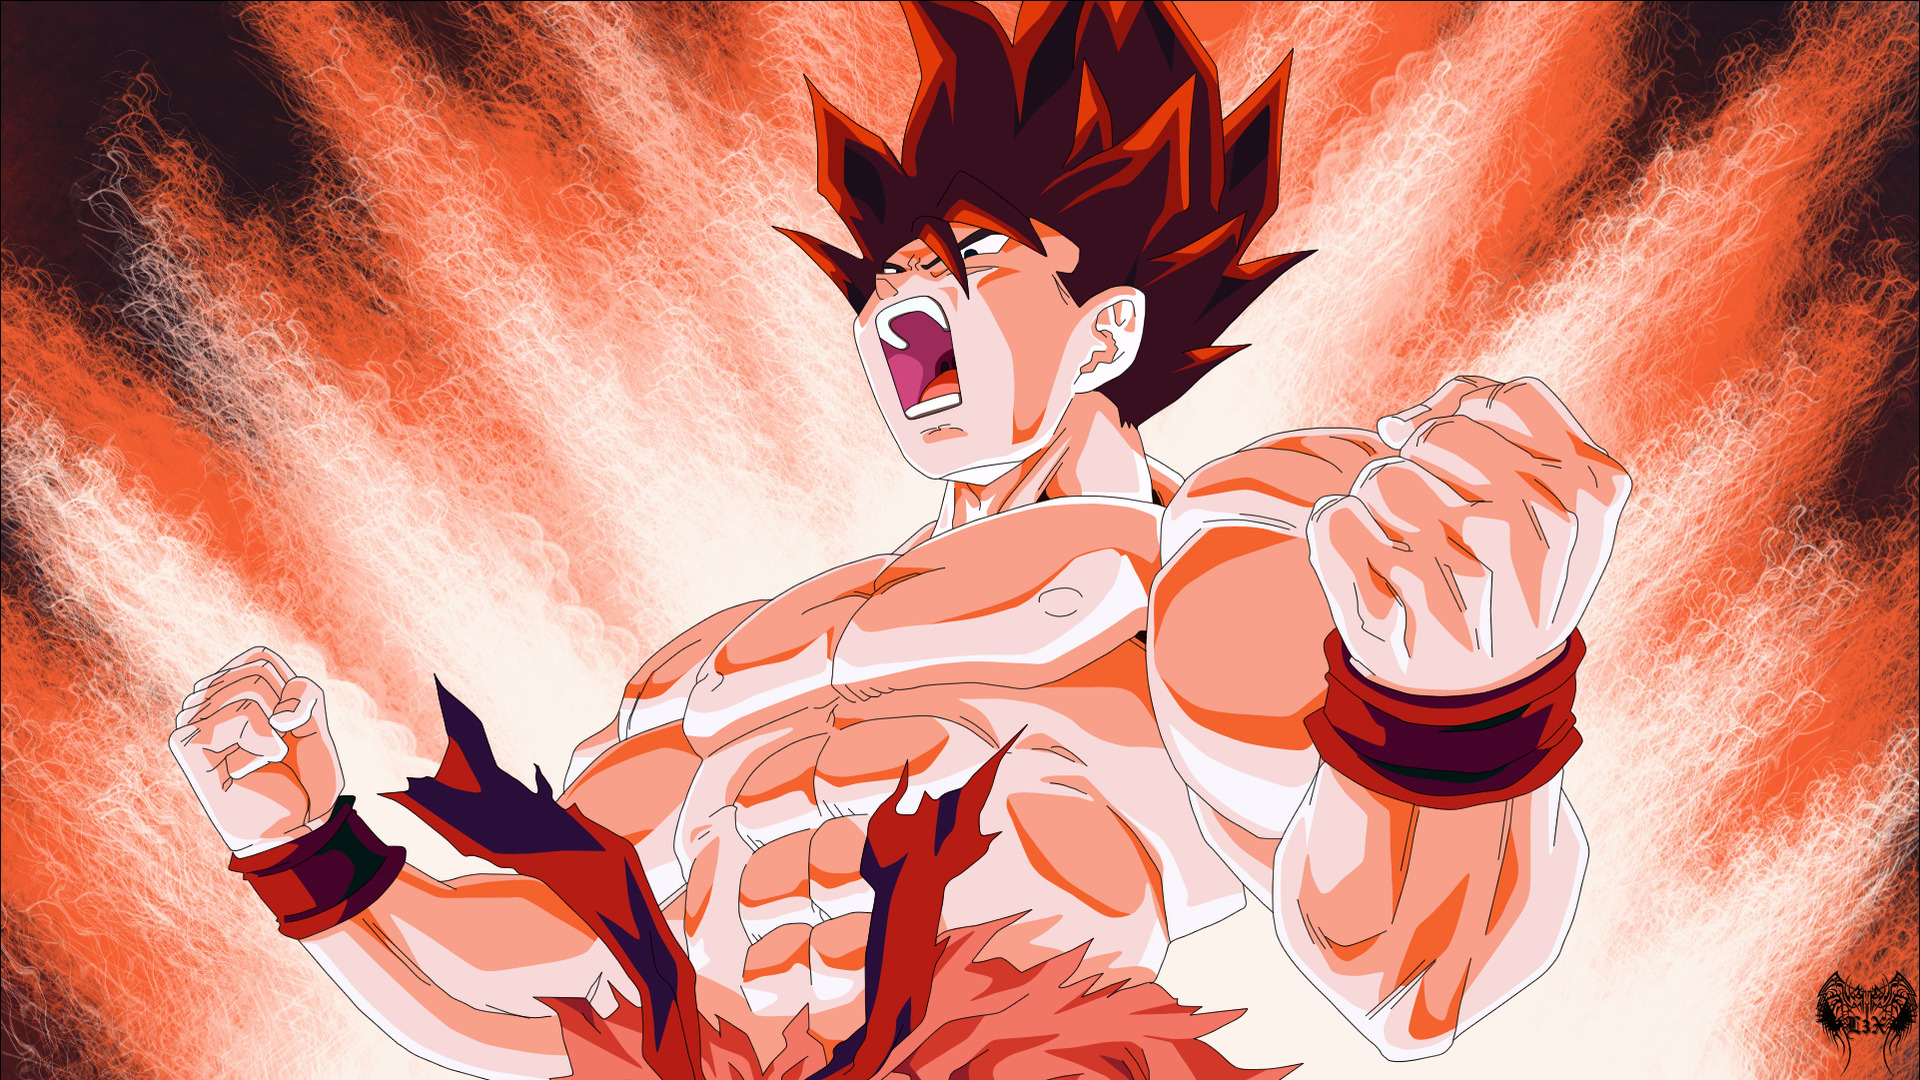 Goku powering up in Dragon Ball.